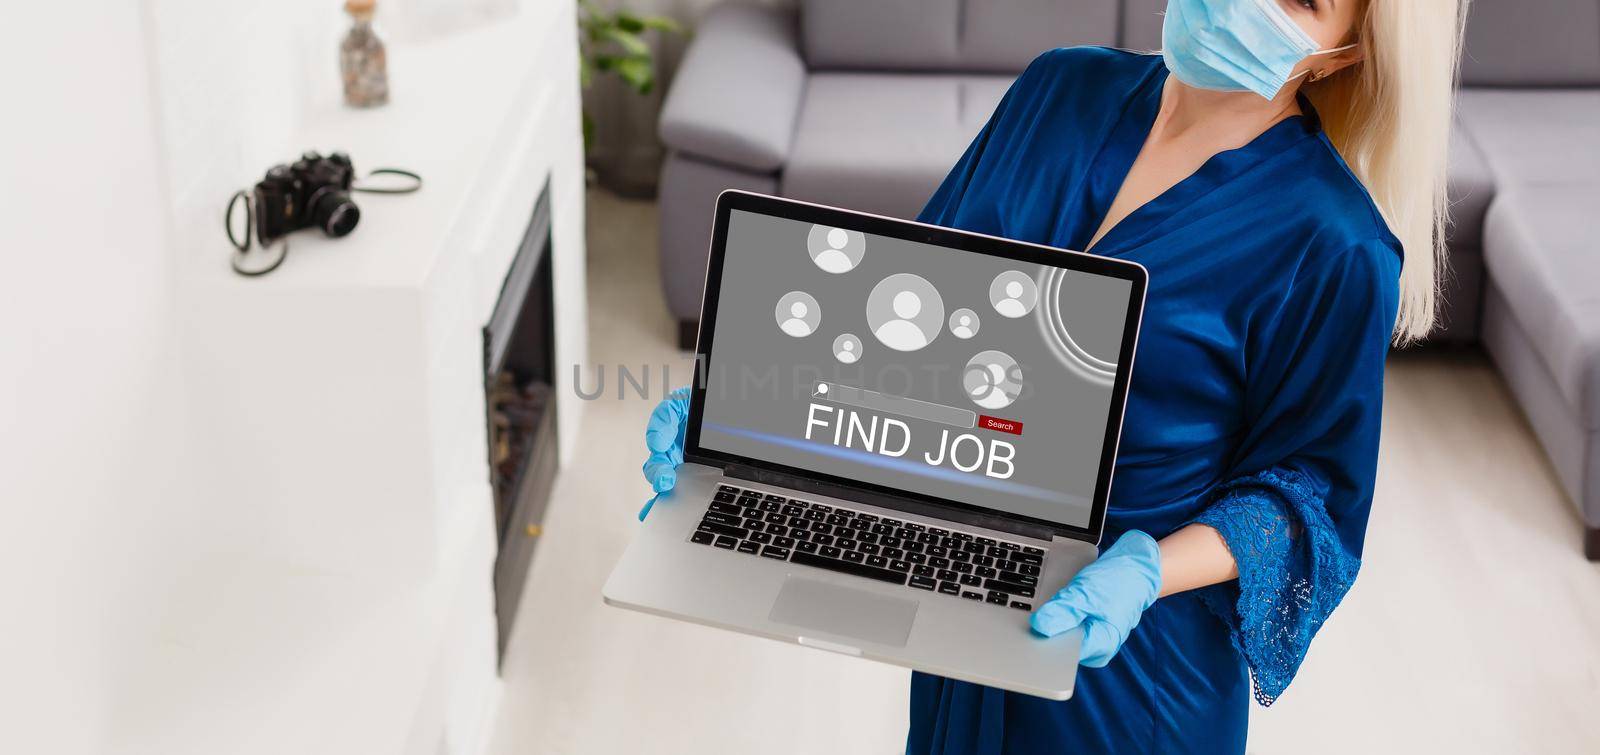 laptop Internet Online Job Search Concept application